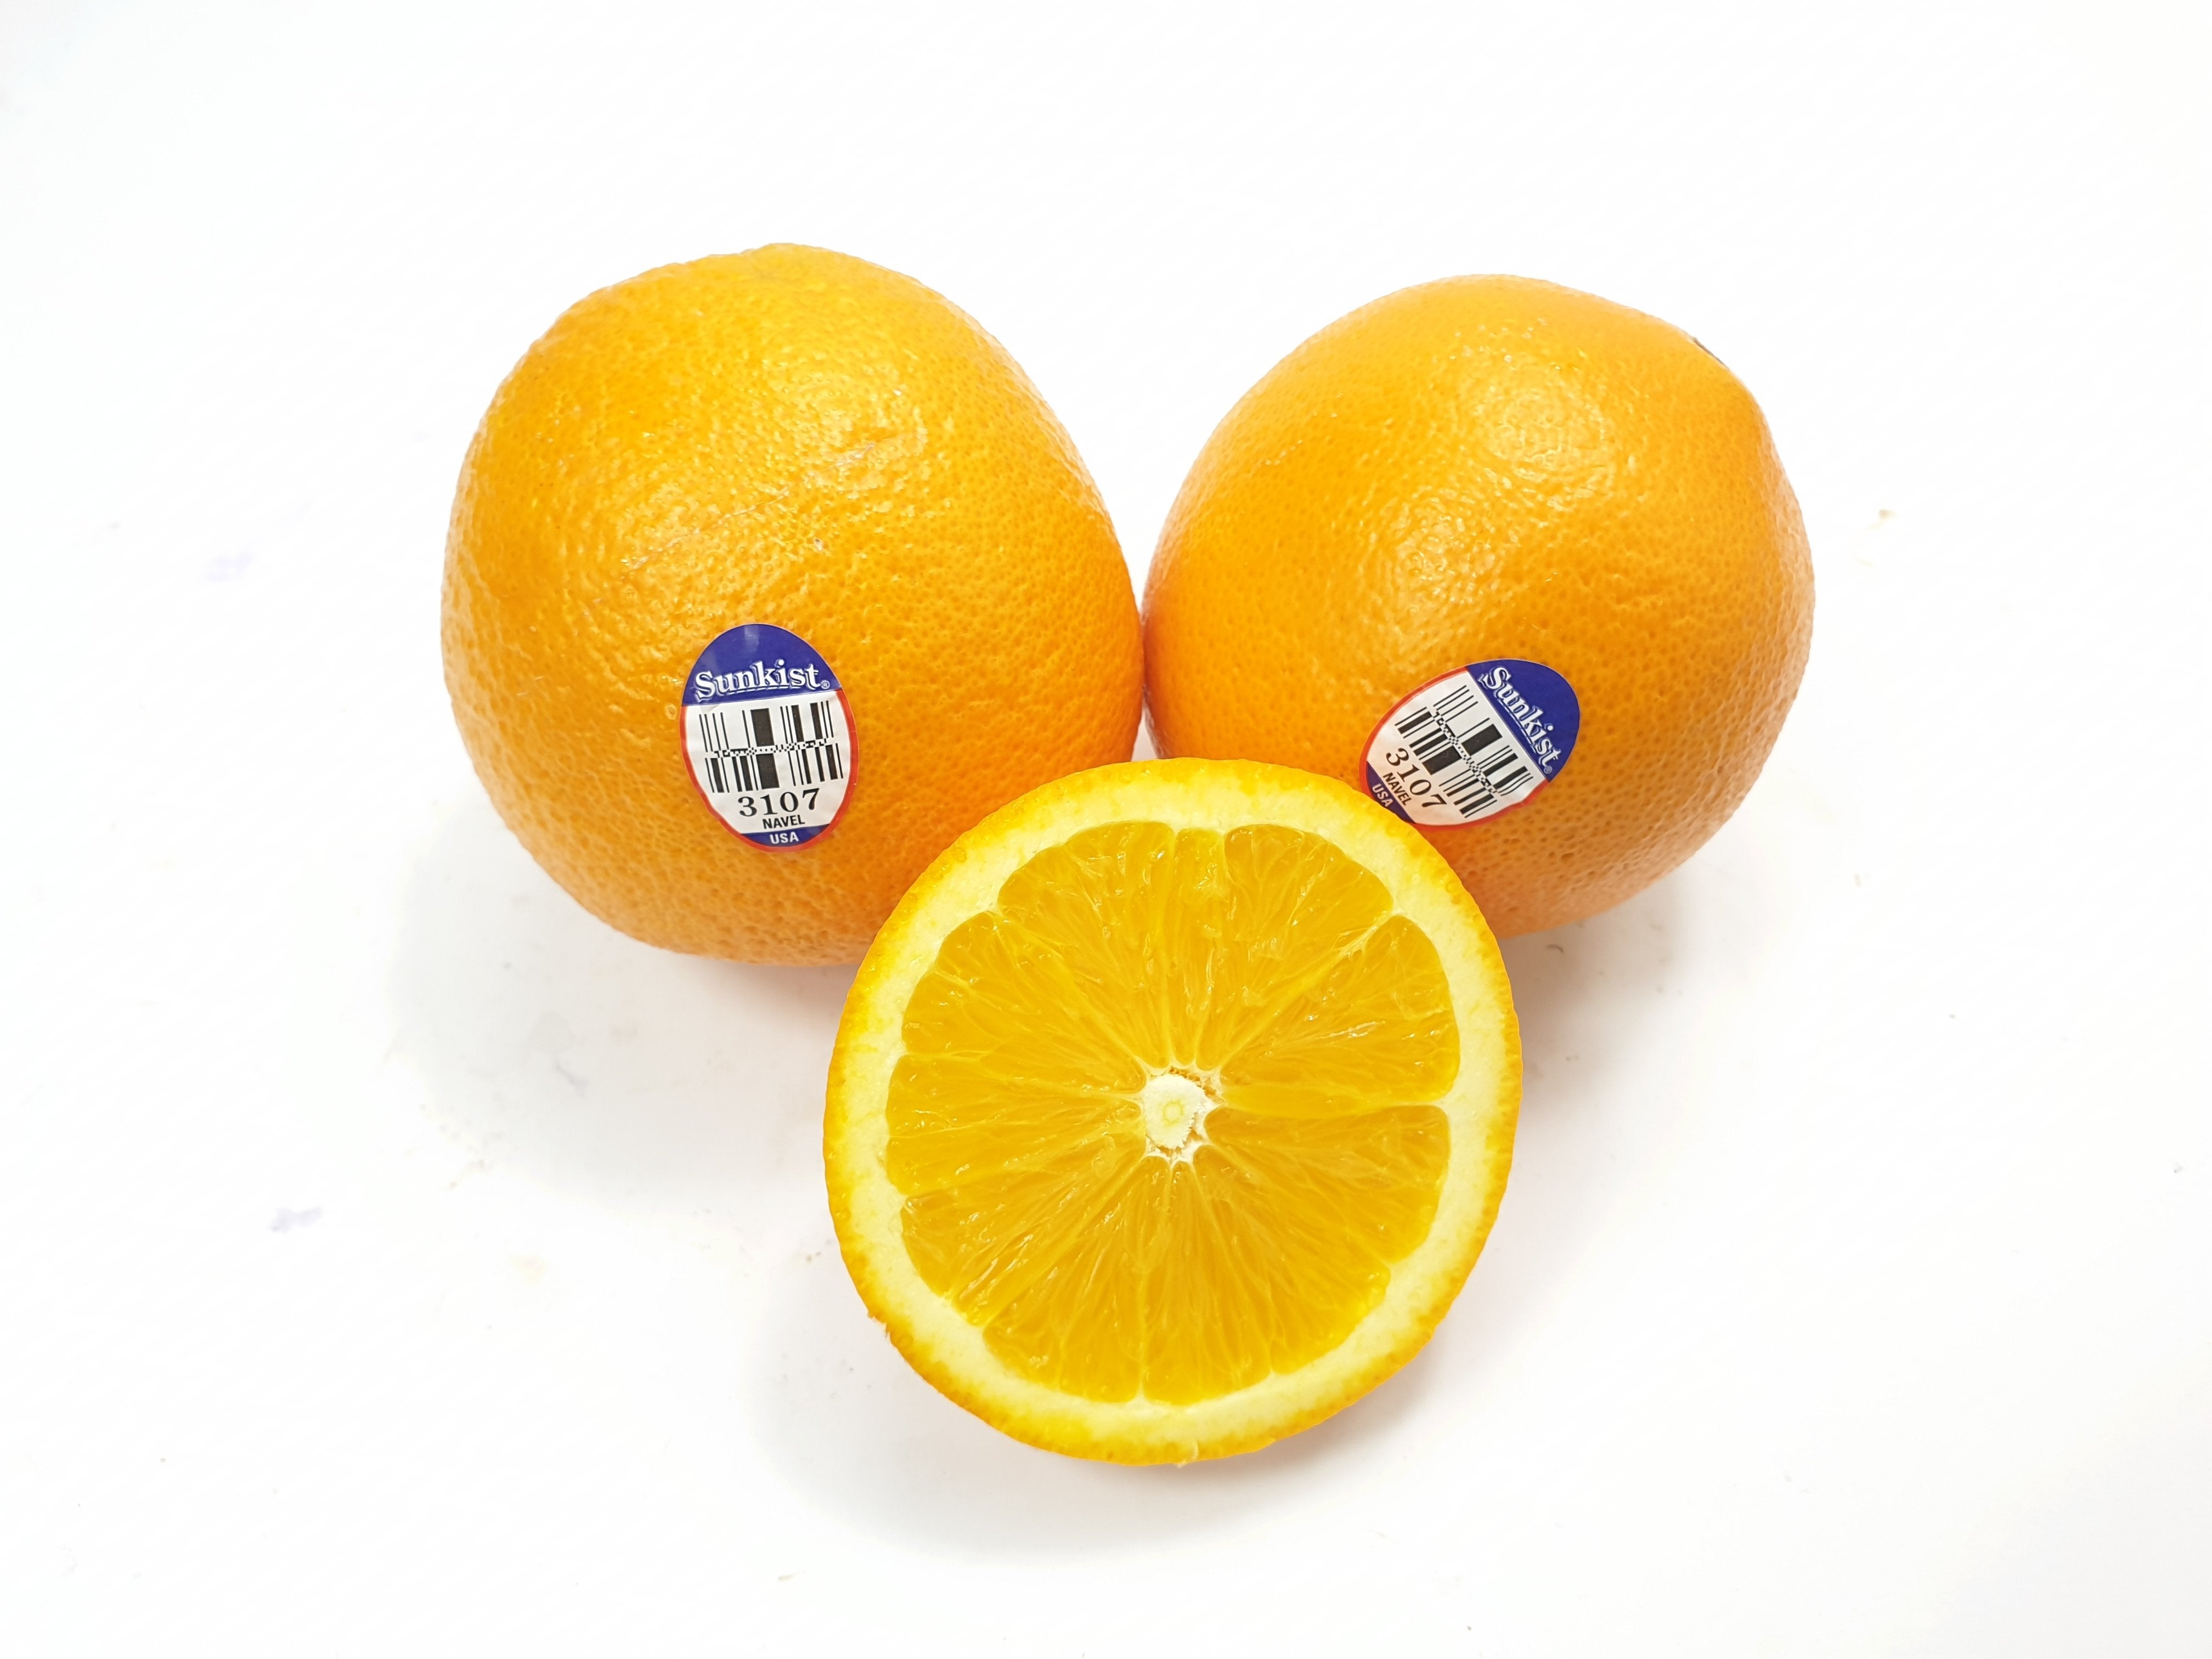 USA Sunkist Navel Oranges (L)